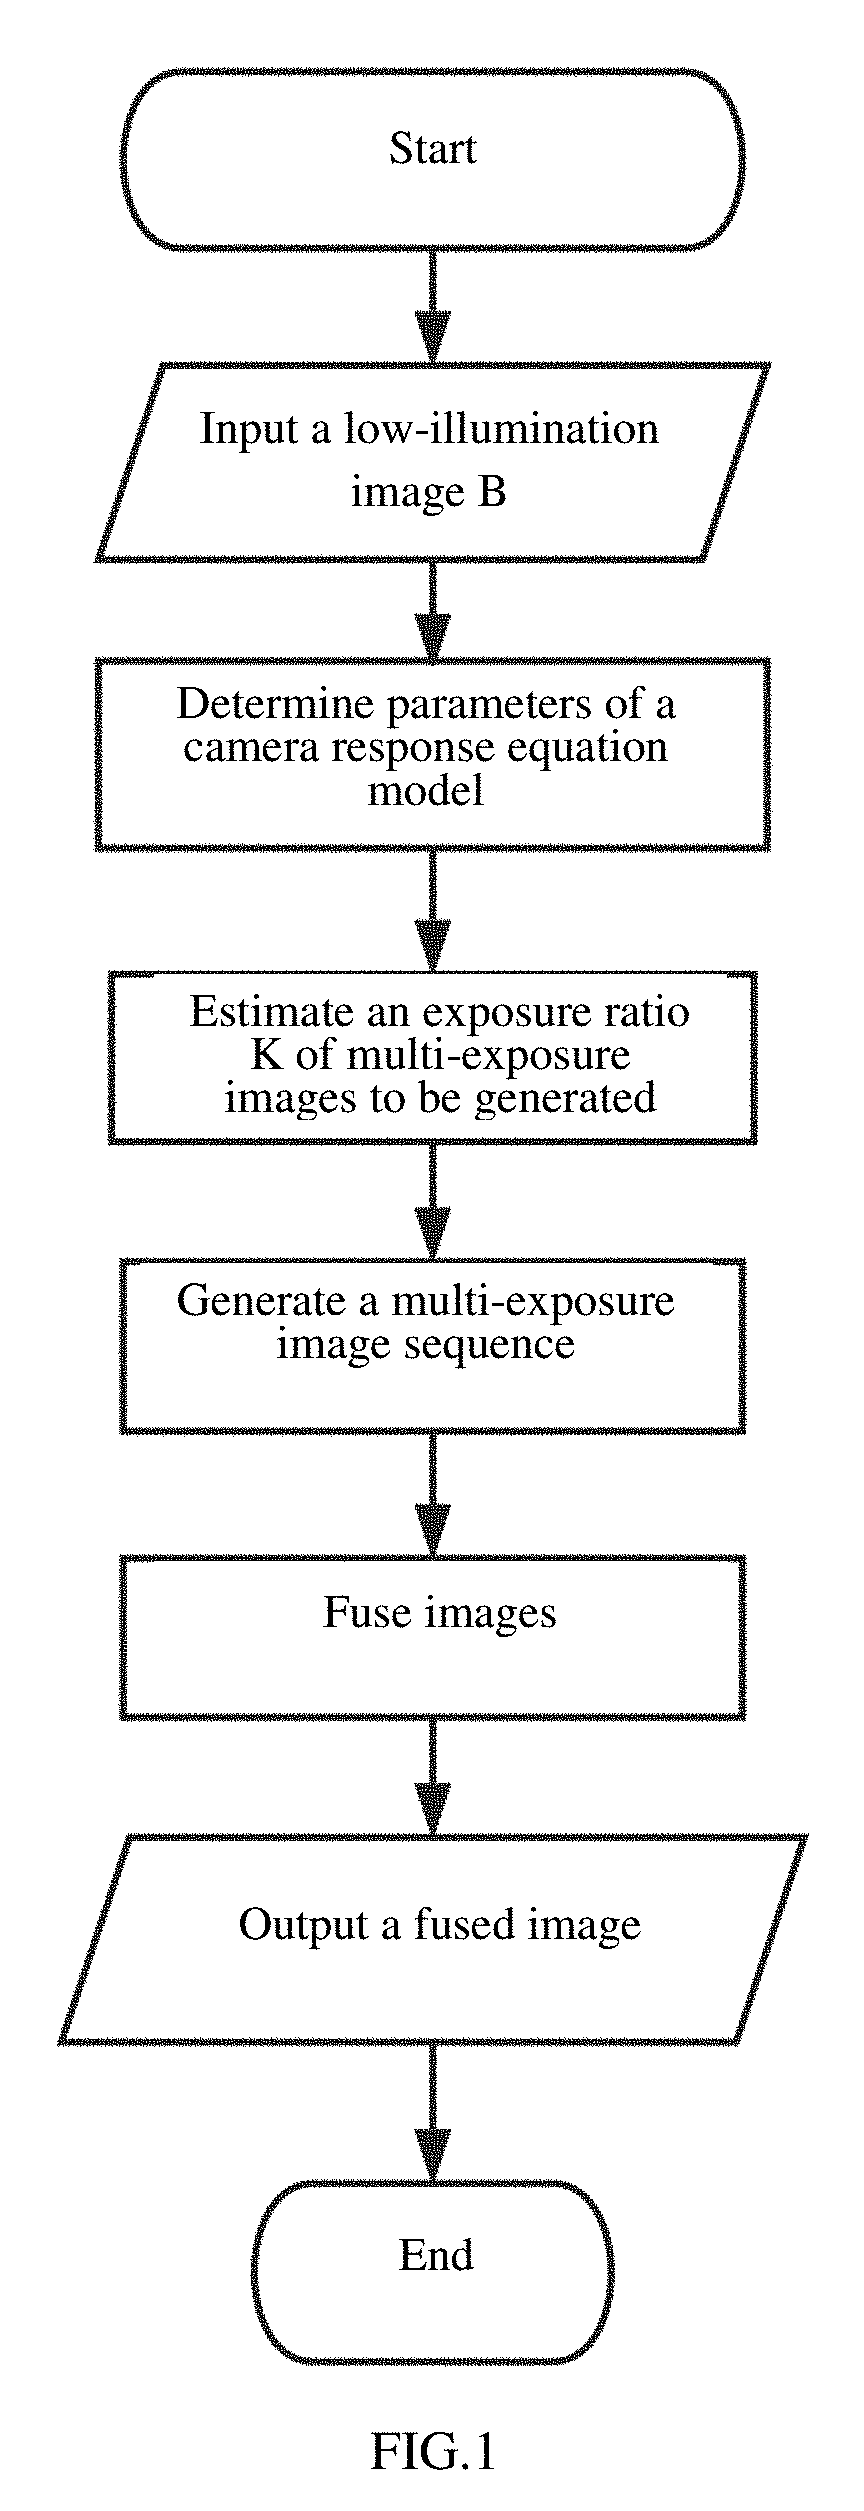 Method for enhancing low-illumination image